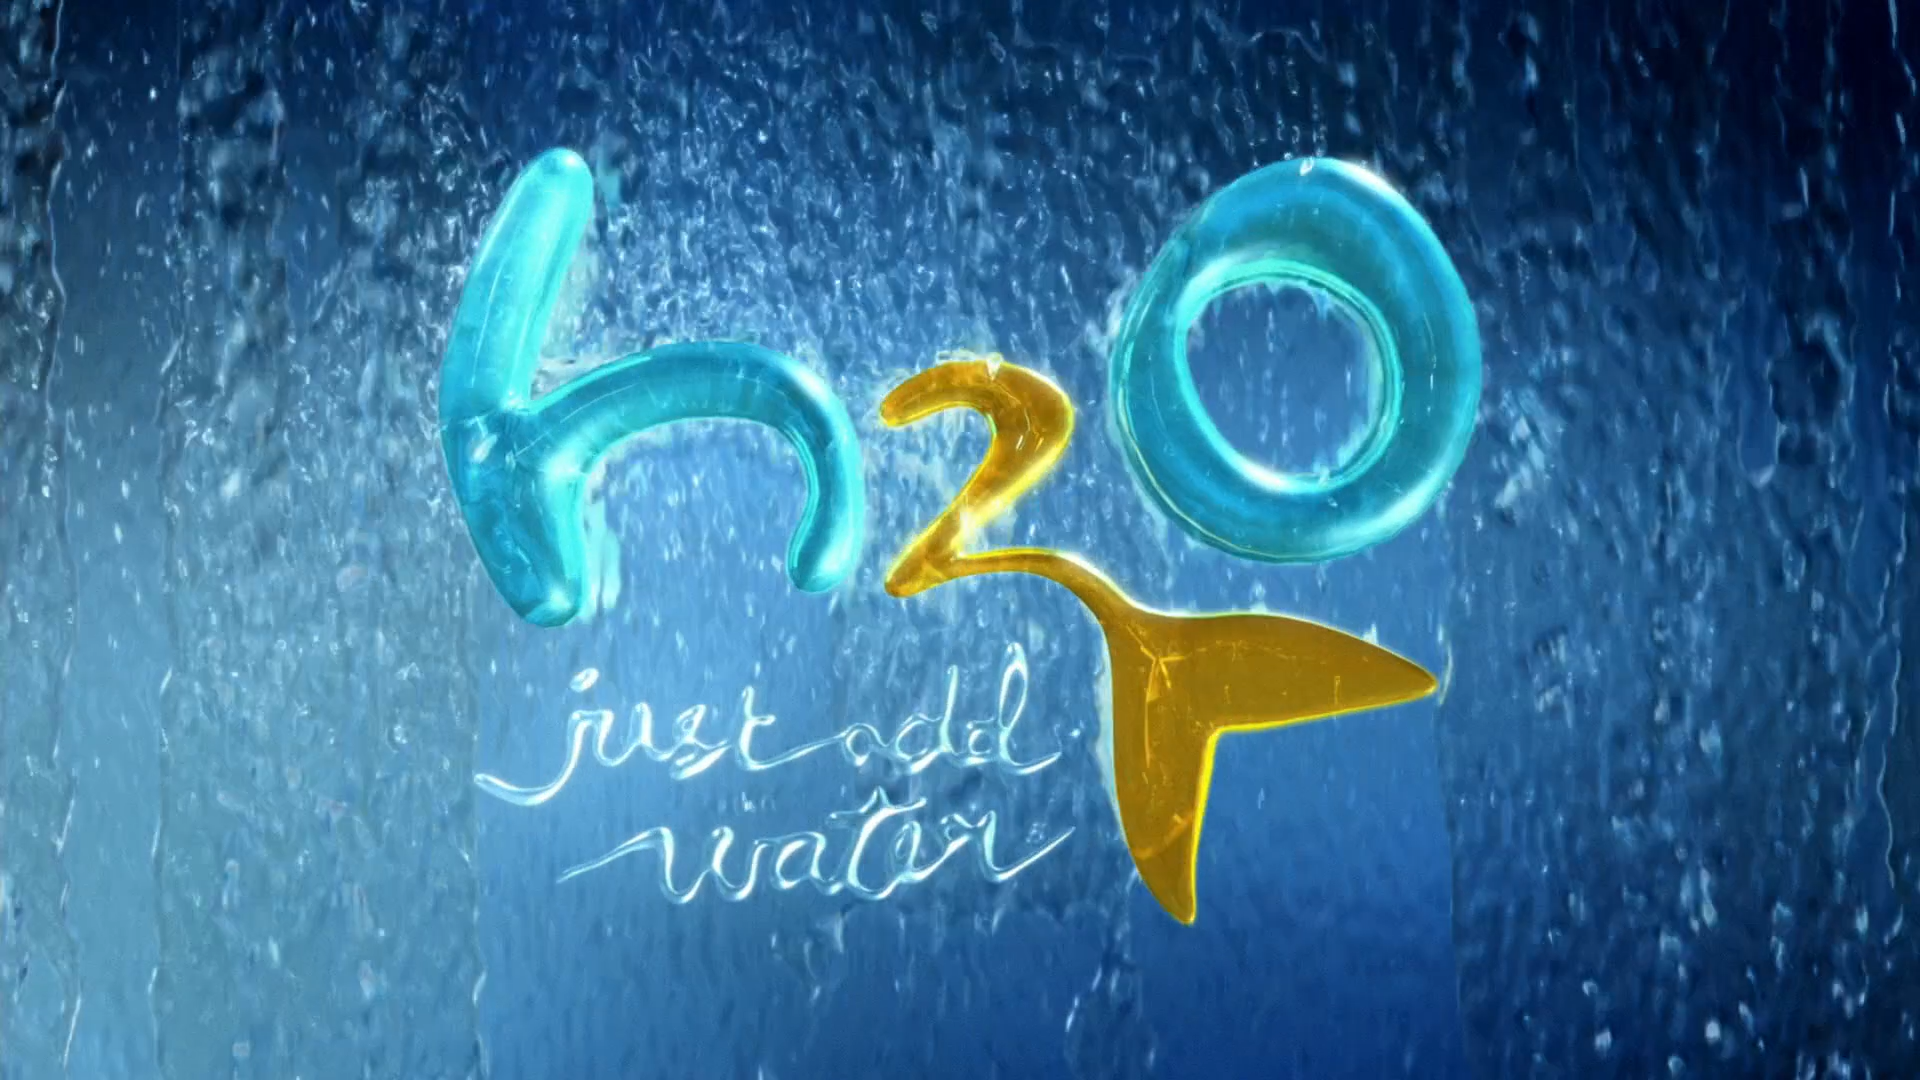 H2O Just Add Water Photo: h2o mermaids